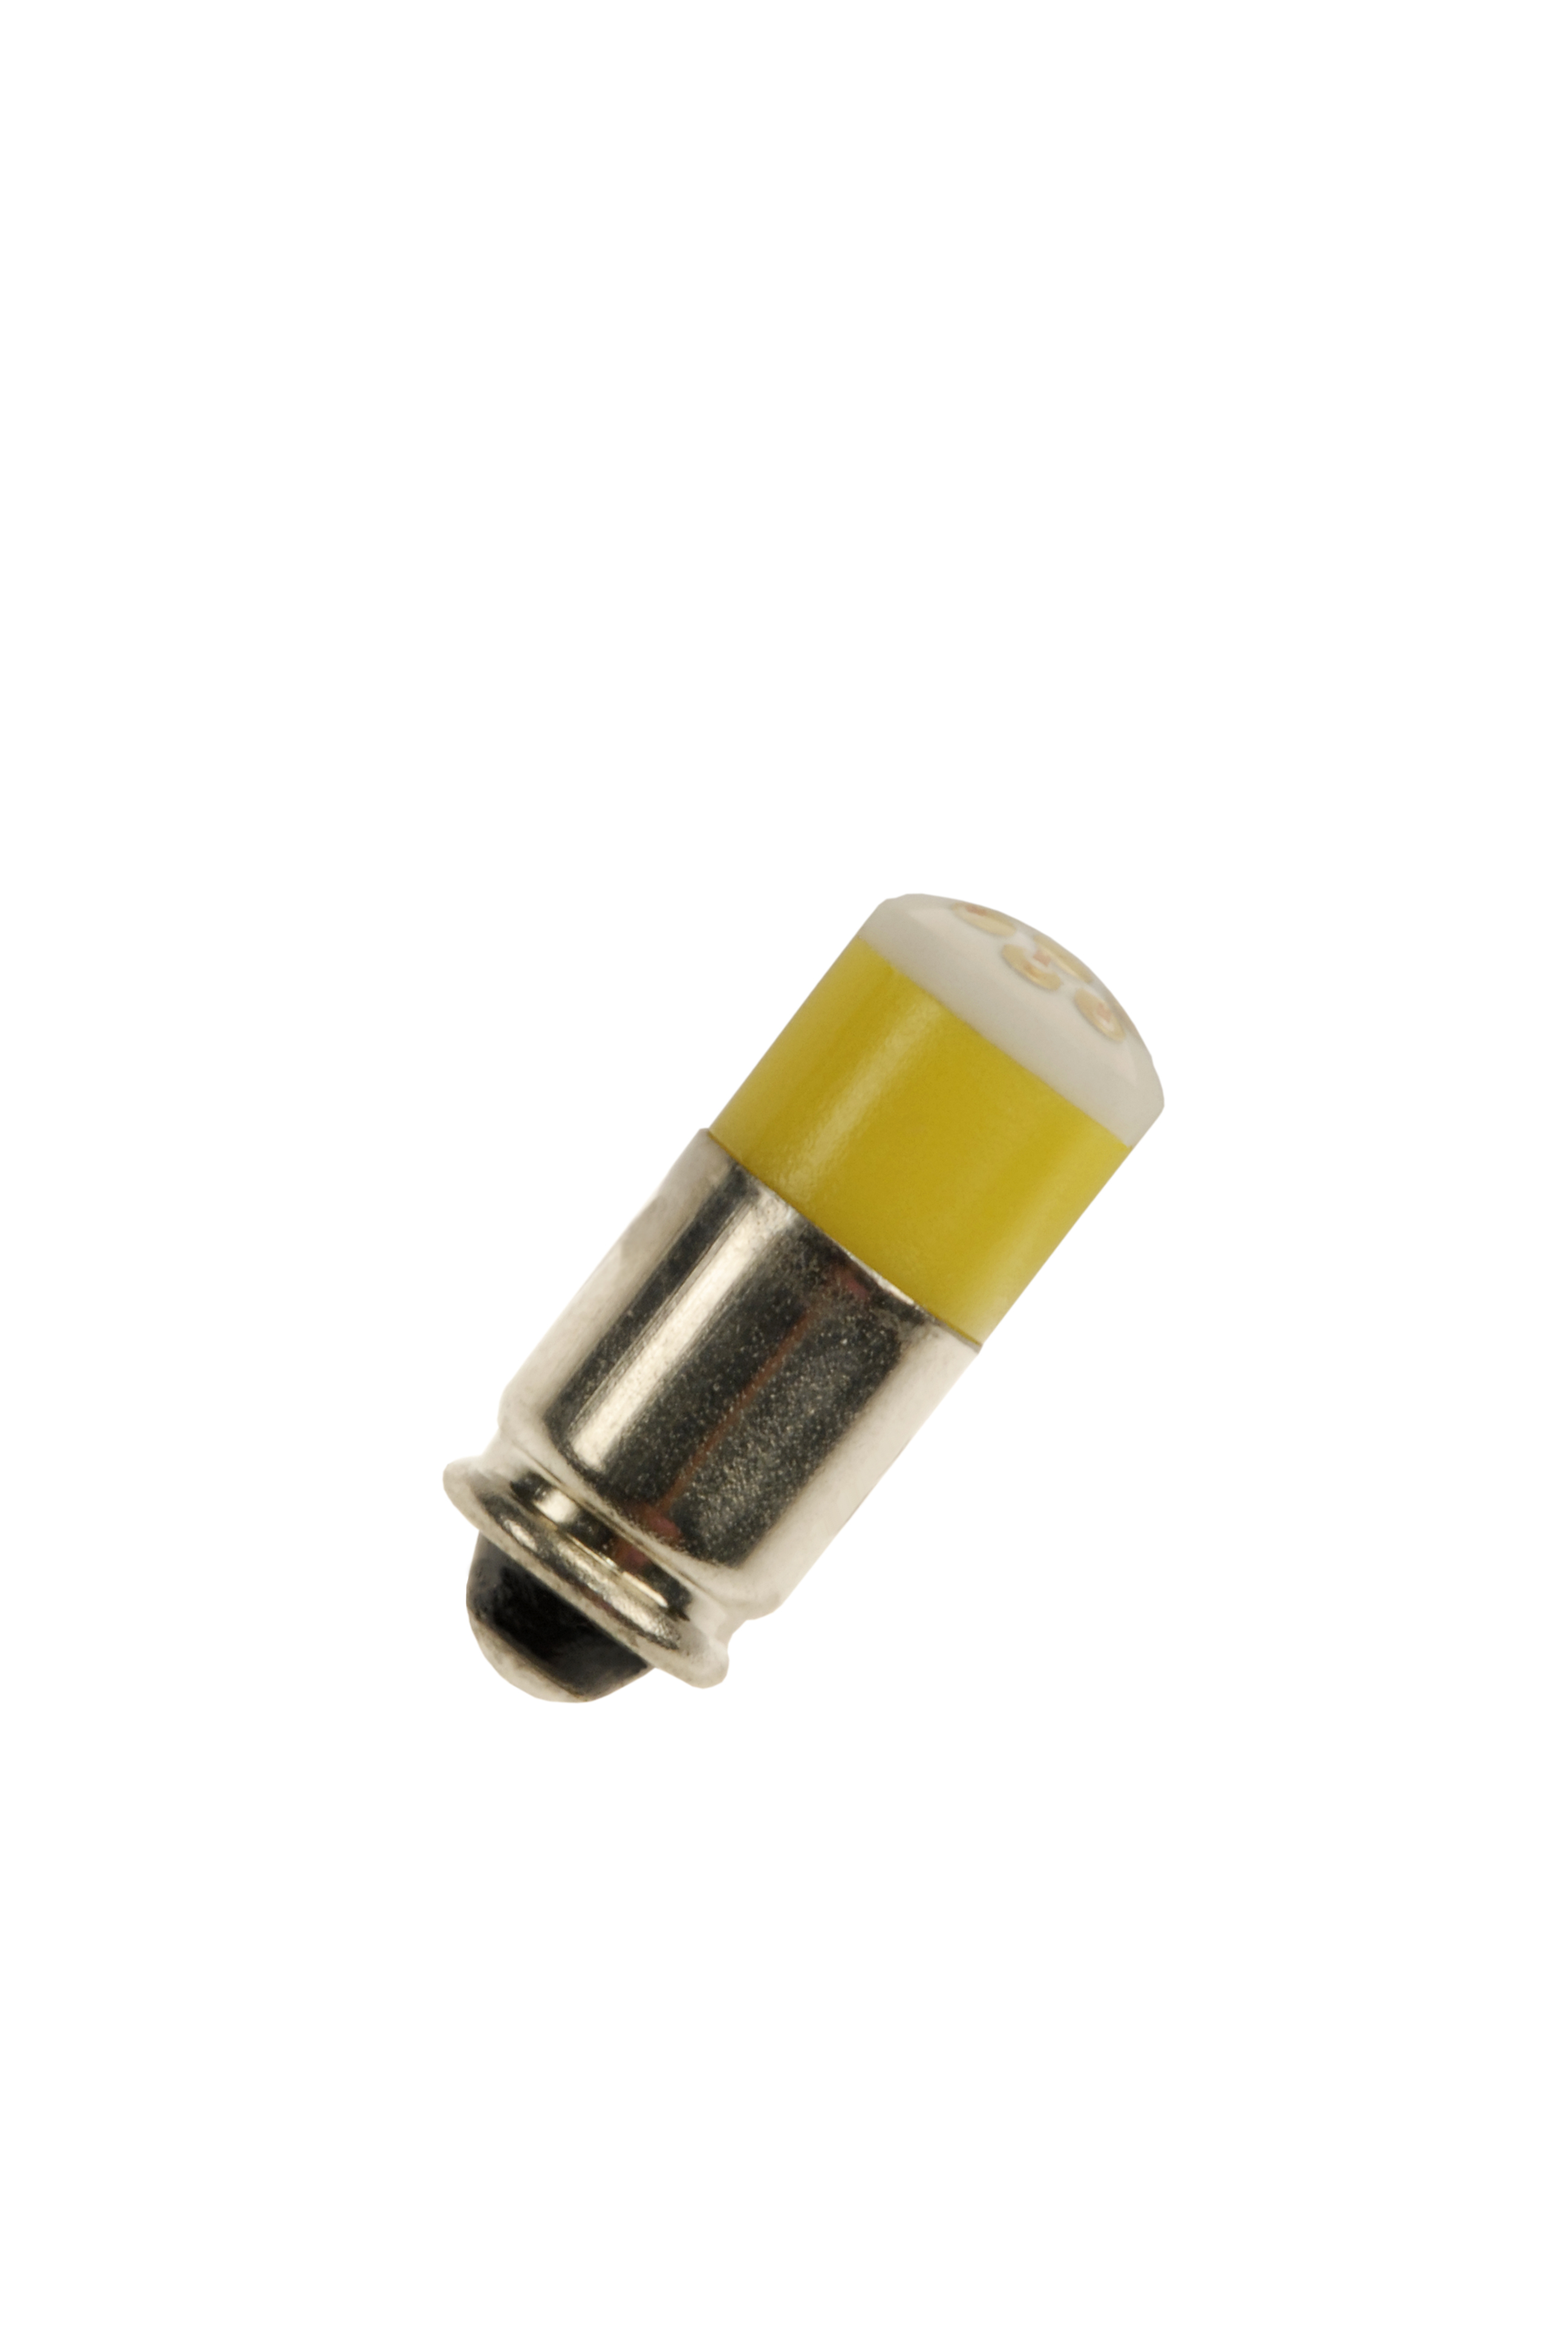 T1 3/4 MG M.LED Yellow 24-28V DC